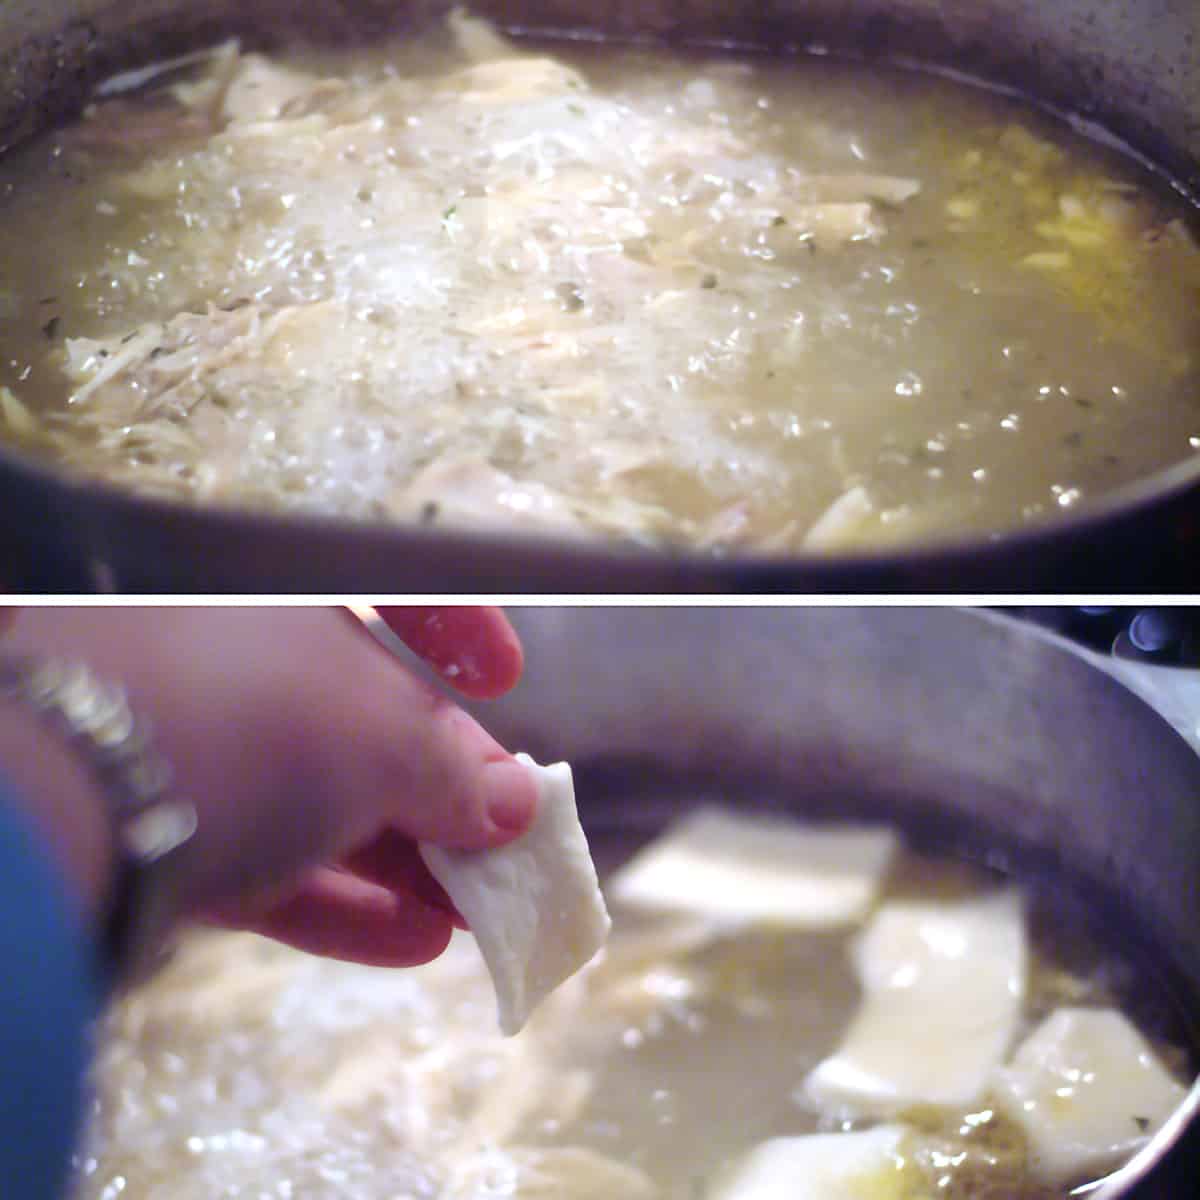 Adding dumplings into hot chicken broth.